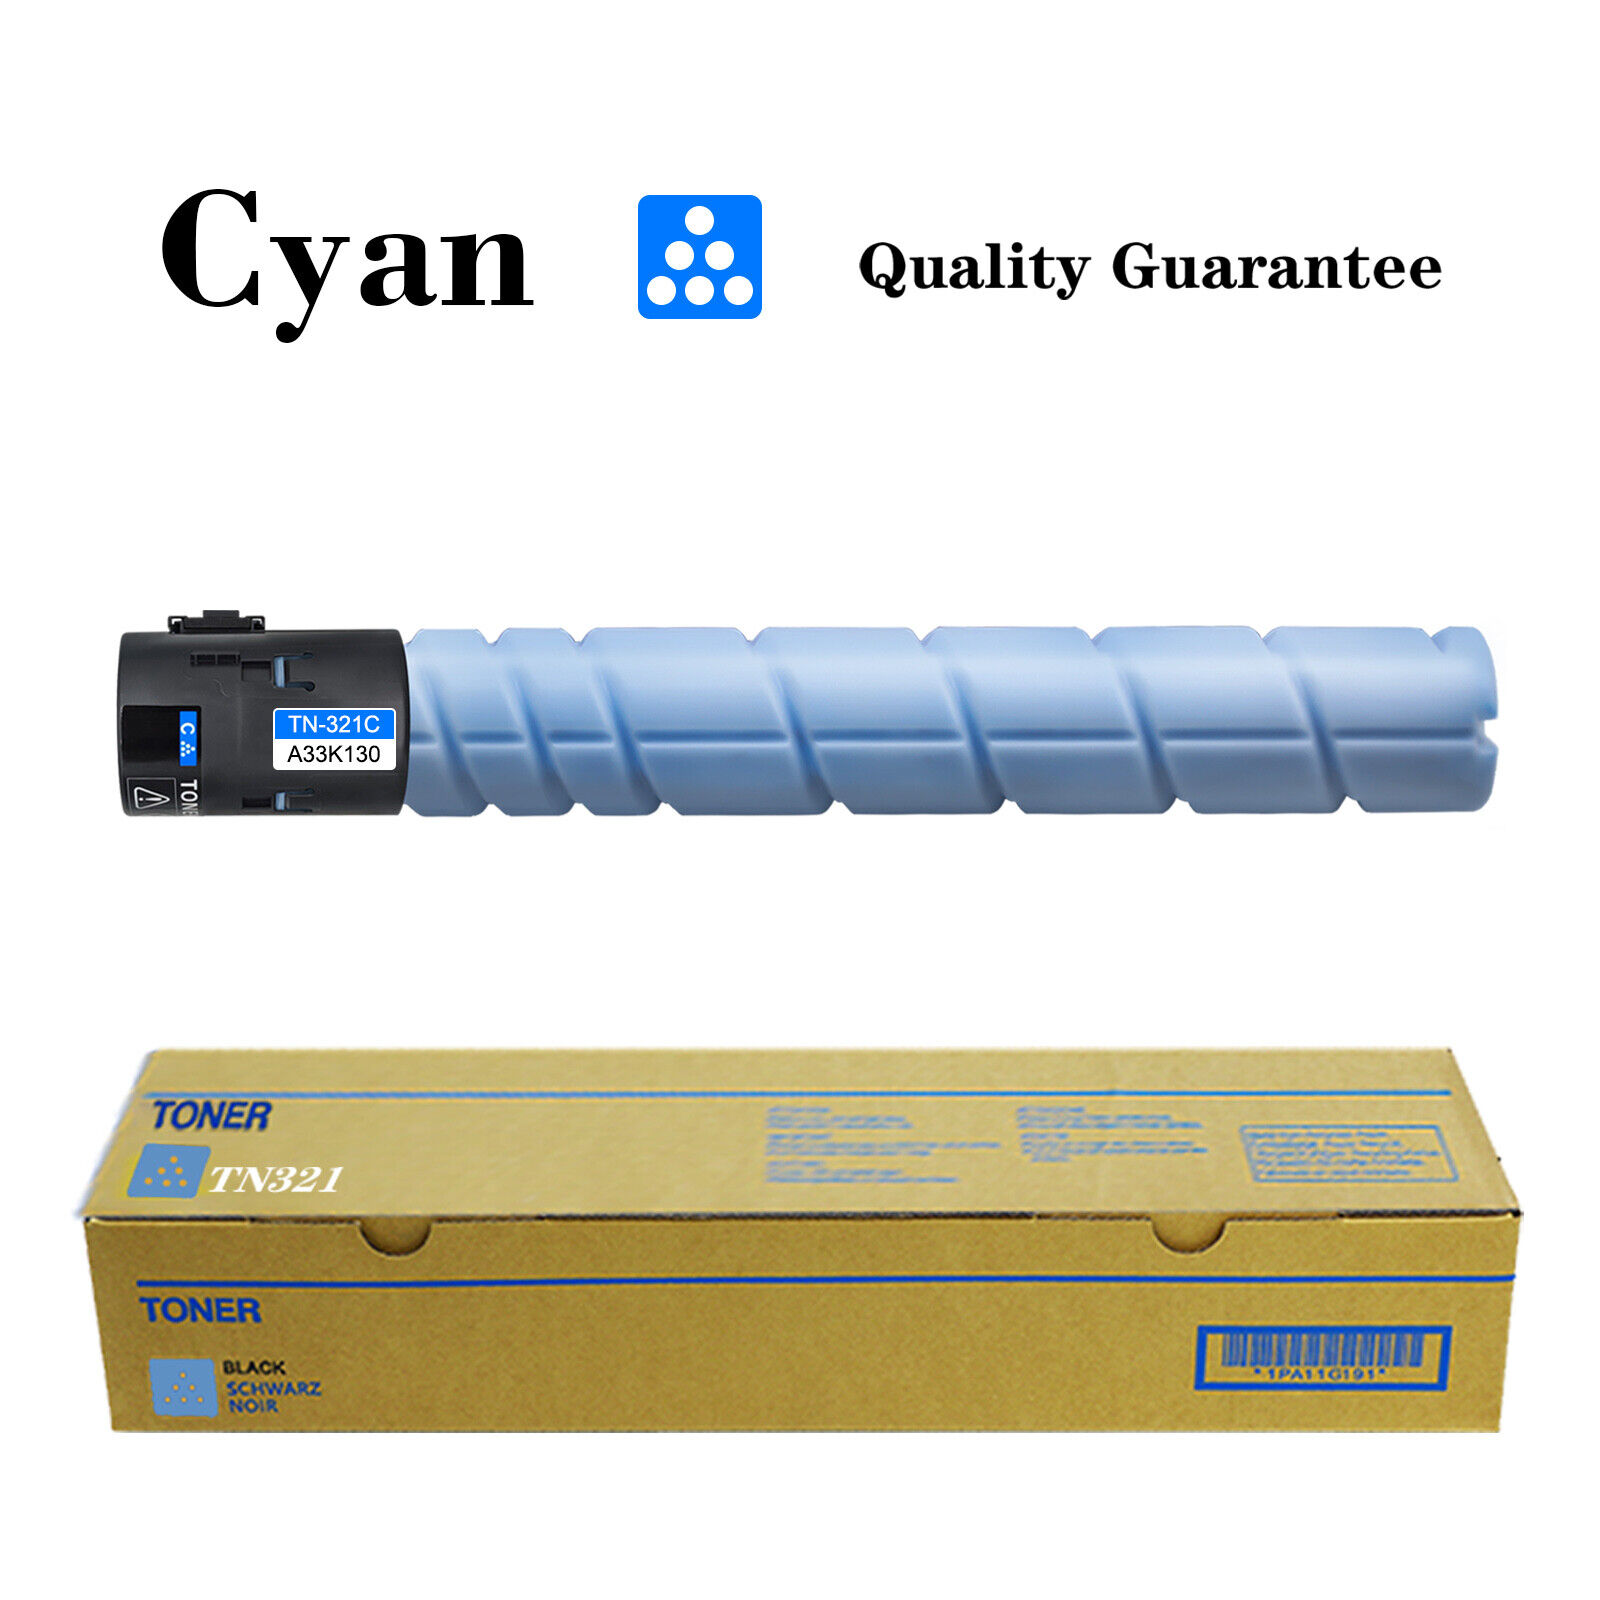 TN-321C Cyan Compatible Toner Cartridge for Konica Minolta (Cyan,1 Pack)